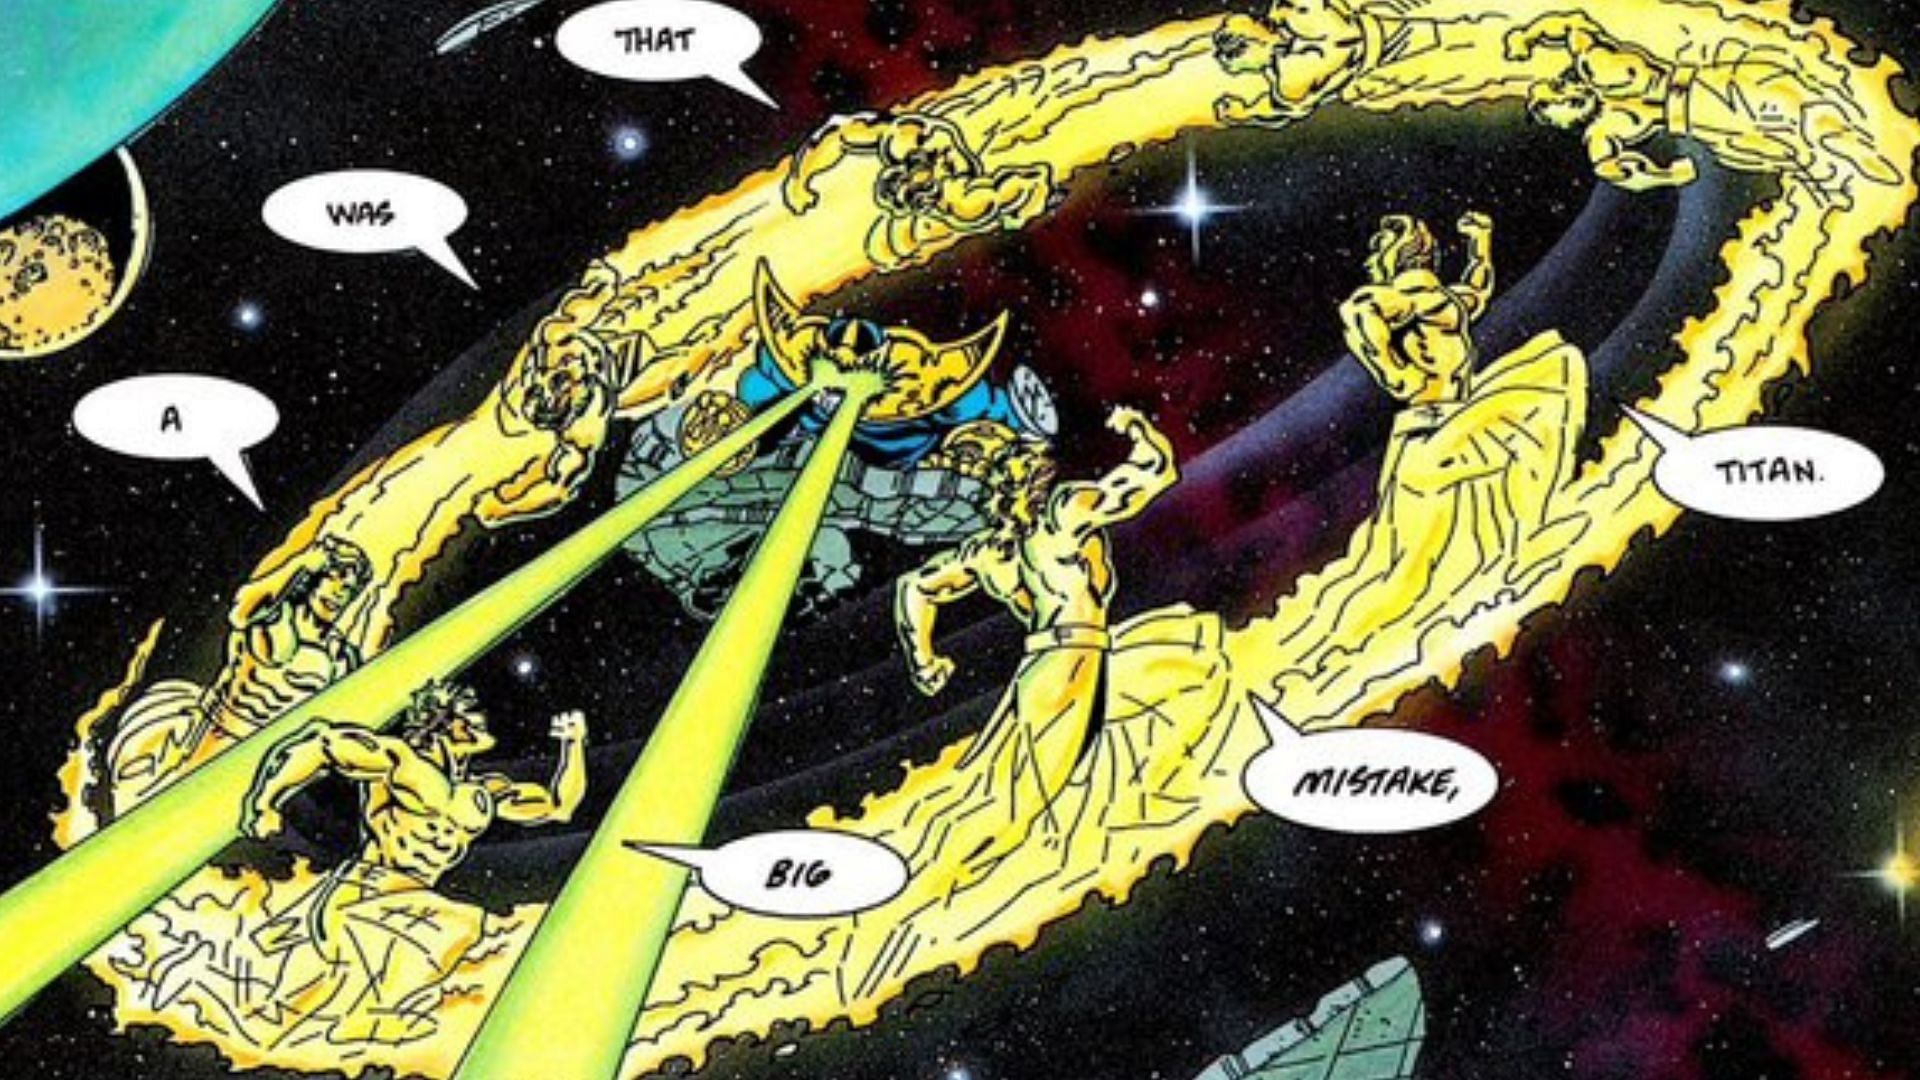 The Mad Titan fights the Runner (Image via Marvel Comics)